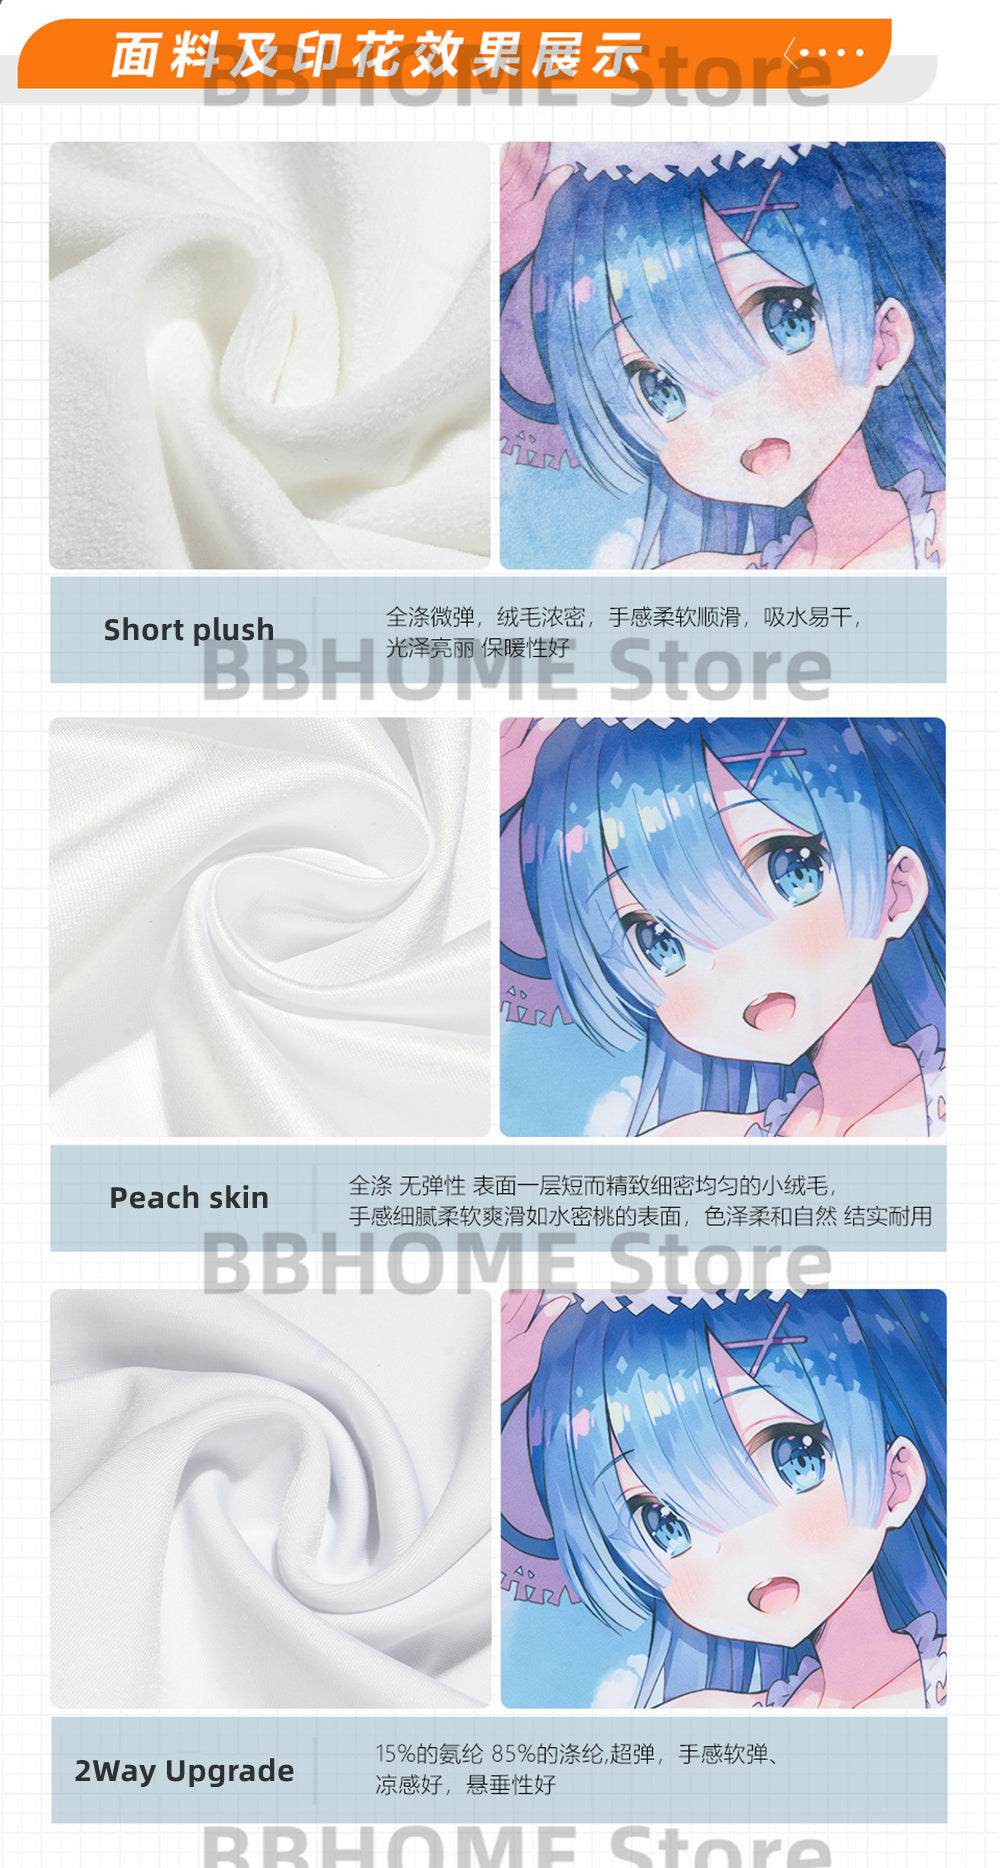 Anime Dakimakura Sexy Body Pillow Cushion Covers